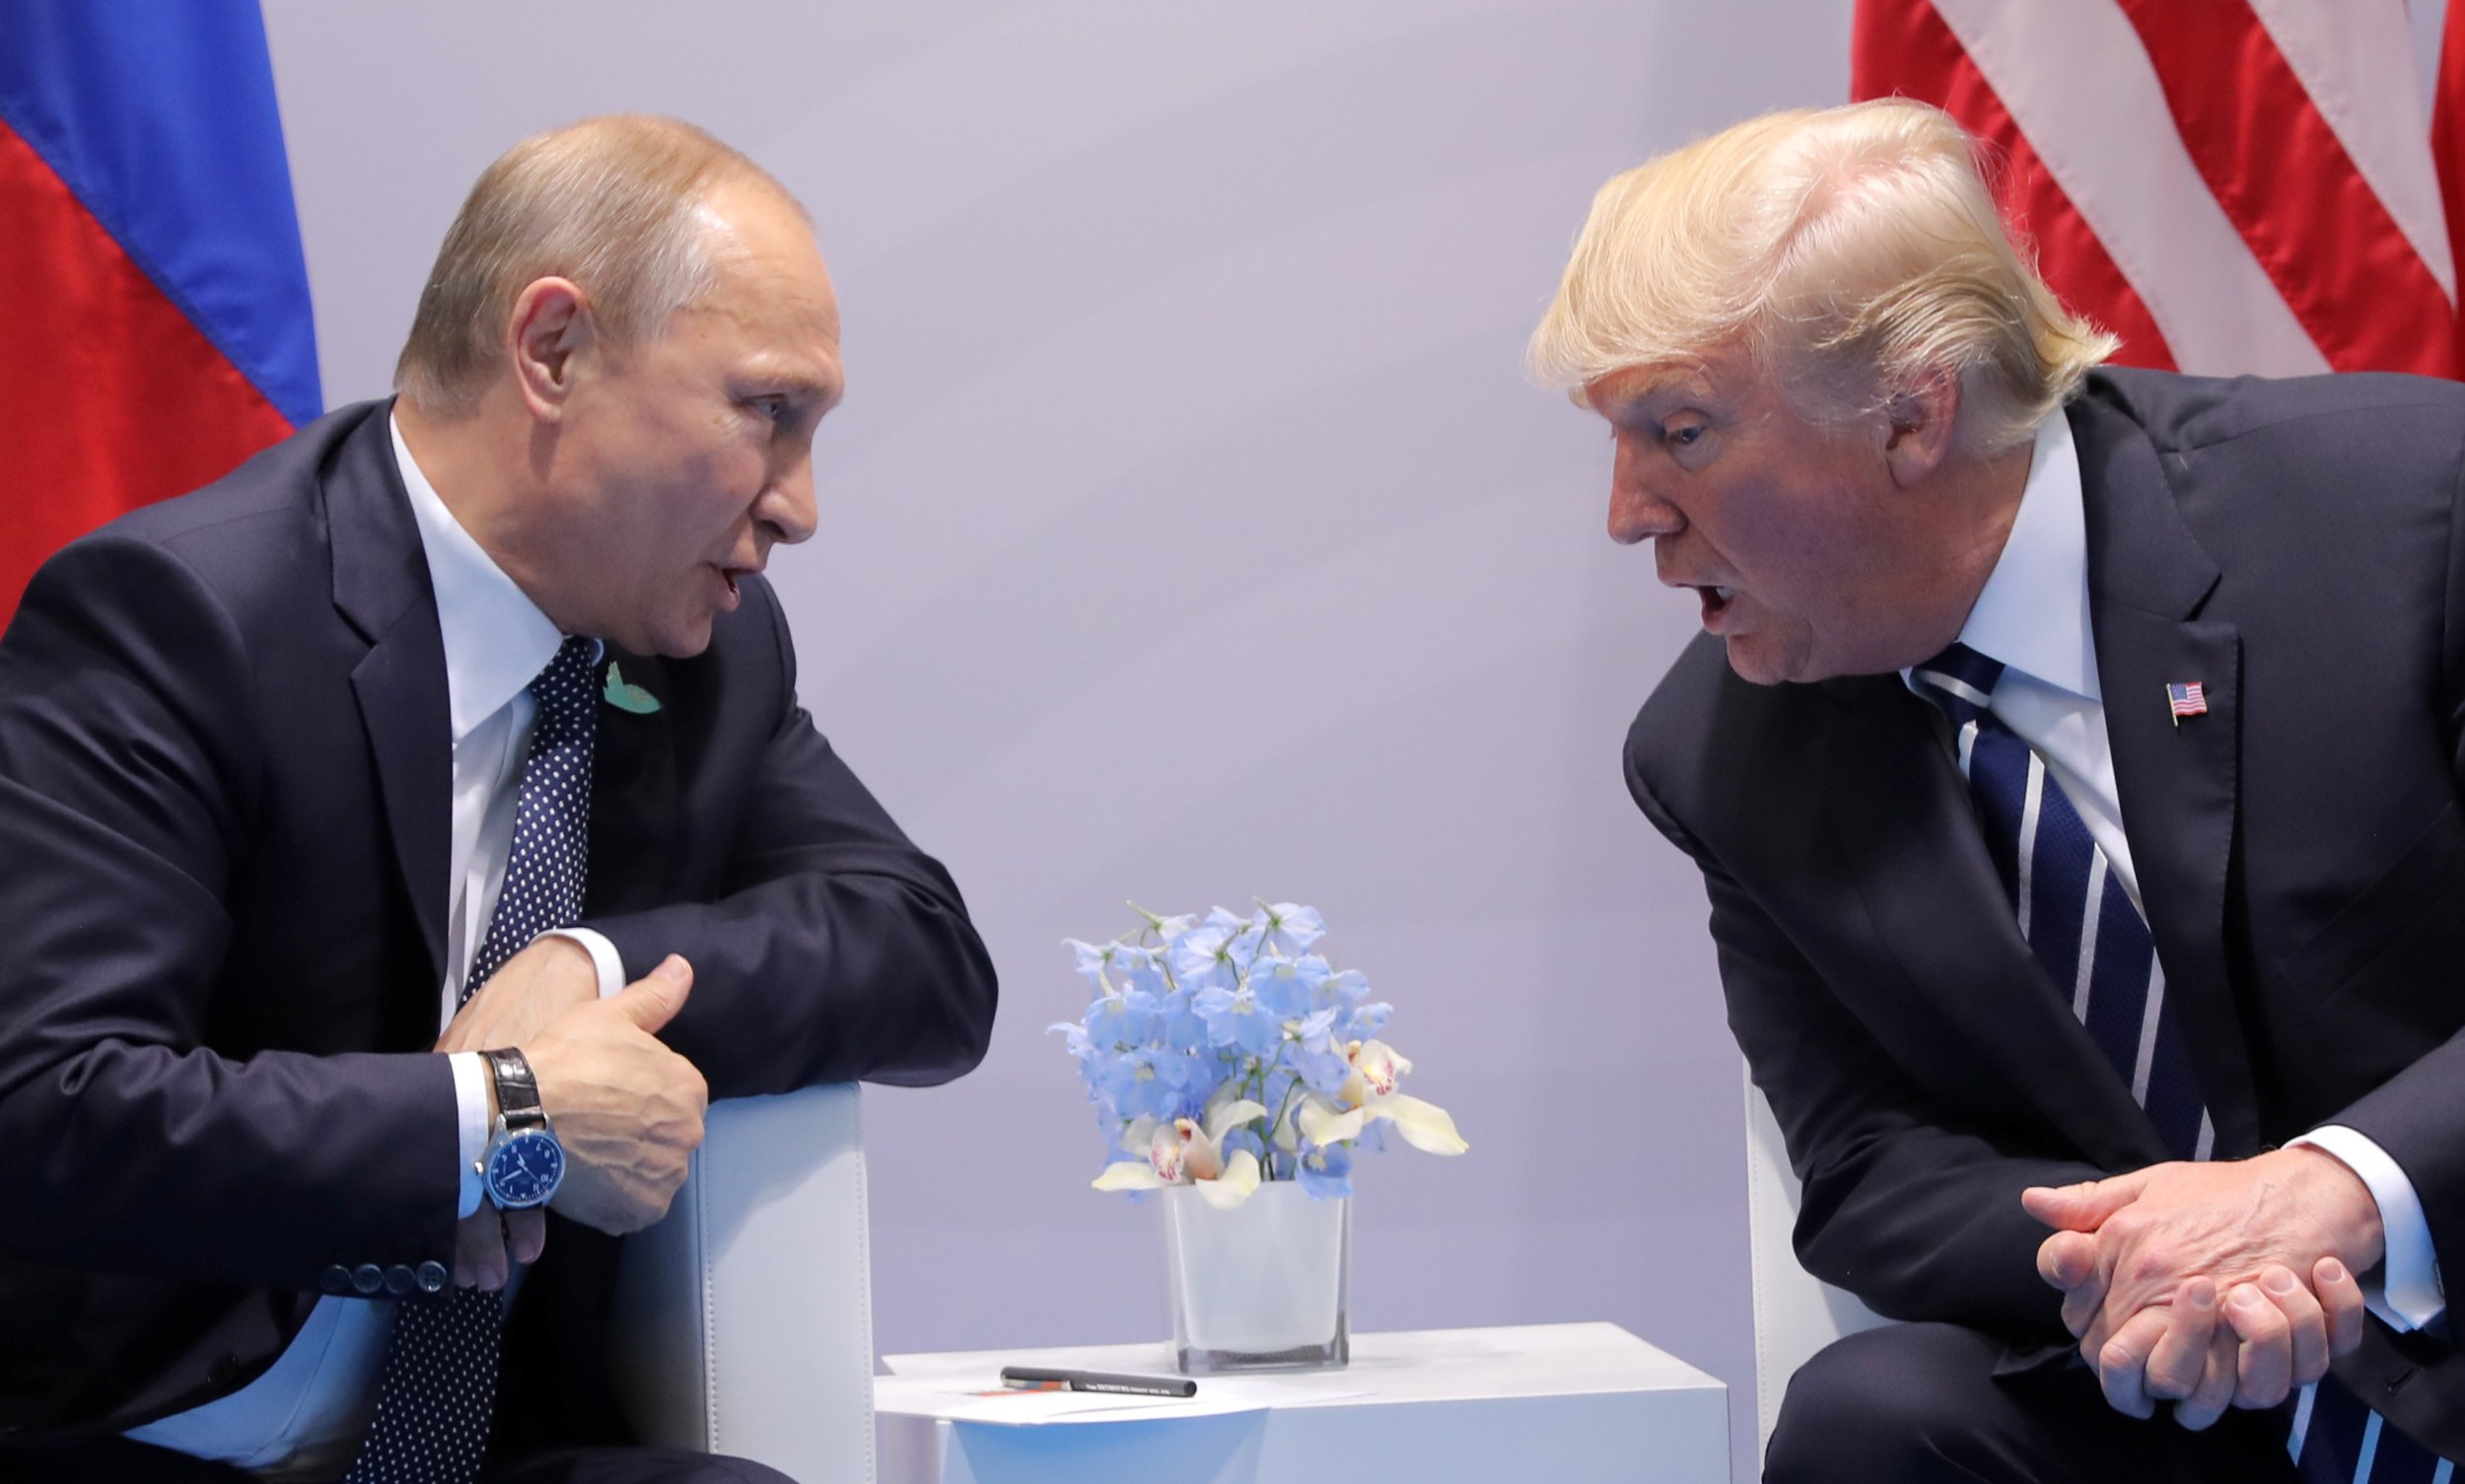 Putin and Trump